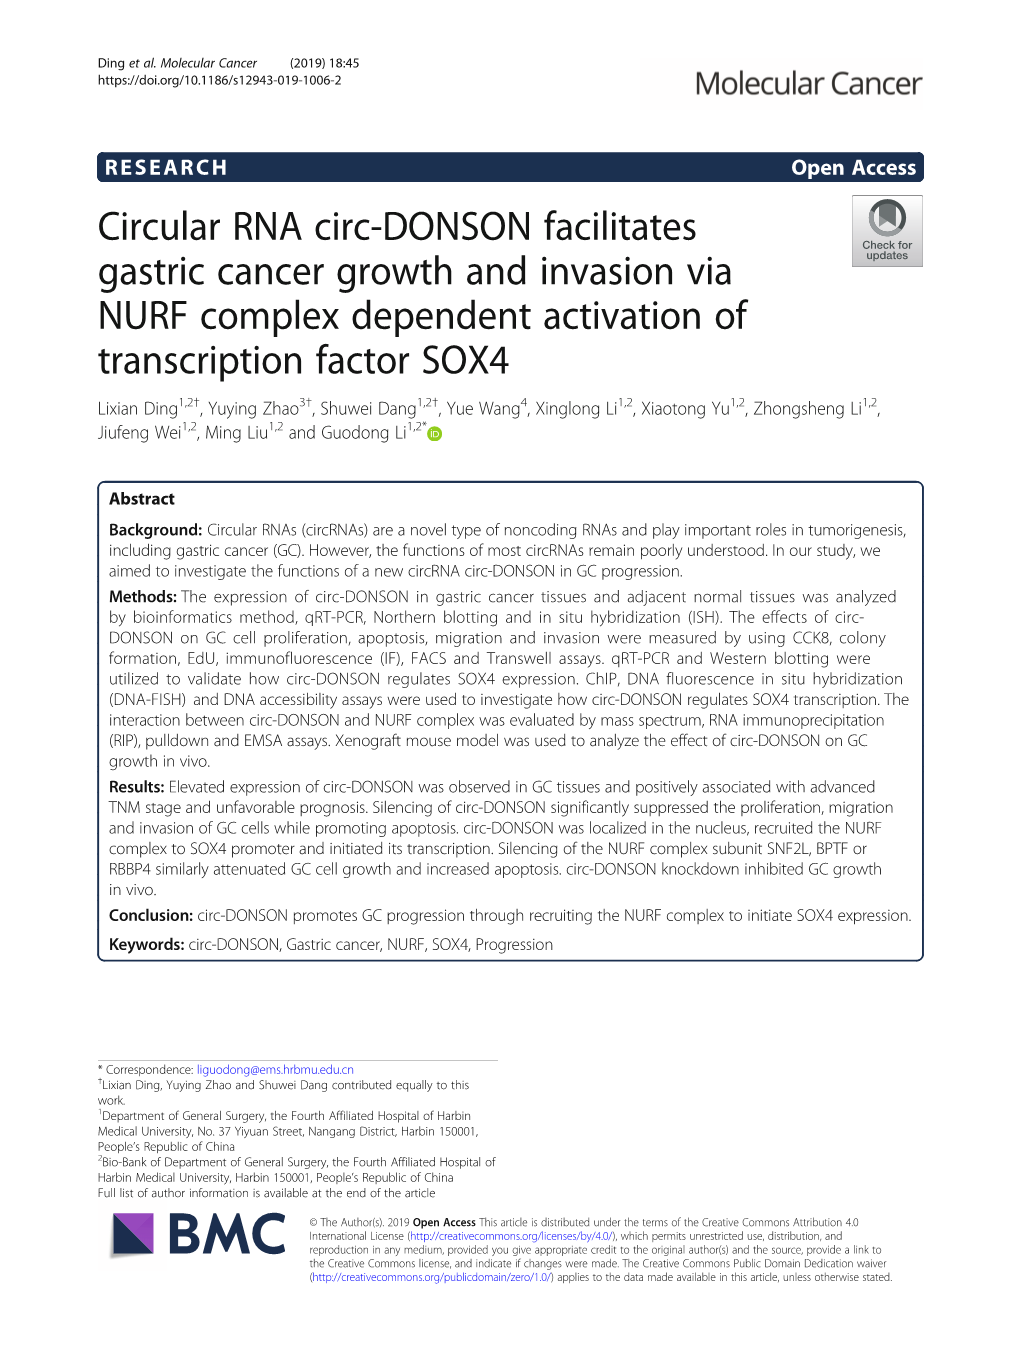 Circular RNA Circ-DONSON Facilitates Gastric Cancer Growth and Invasion Via NURF Complex Dependent Activation of Transcription F